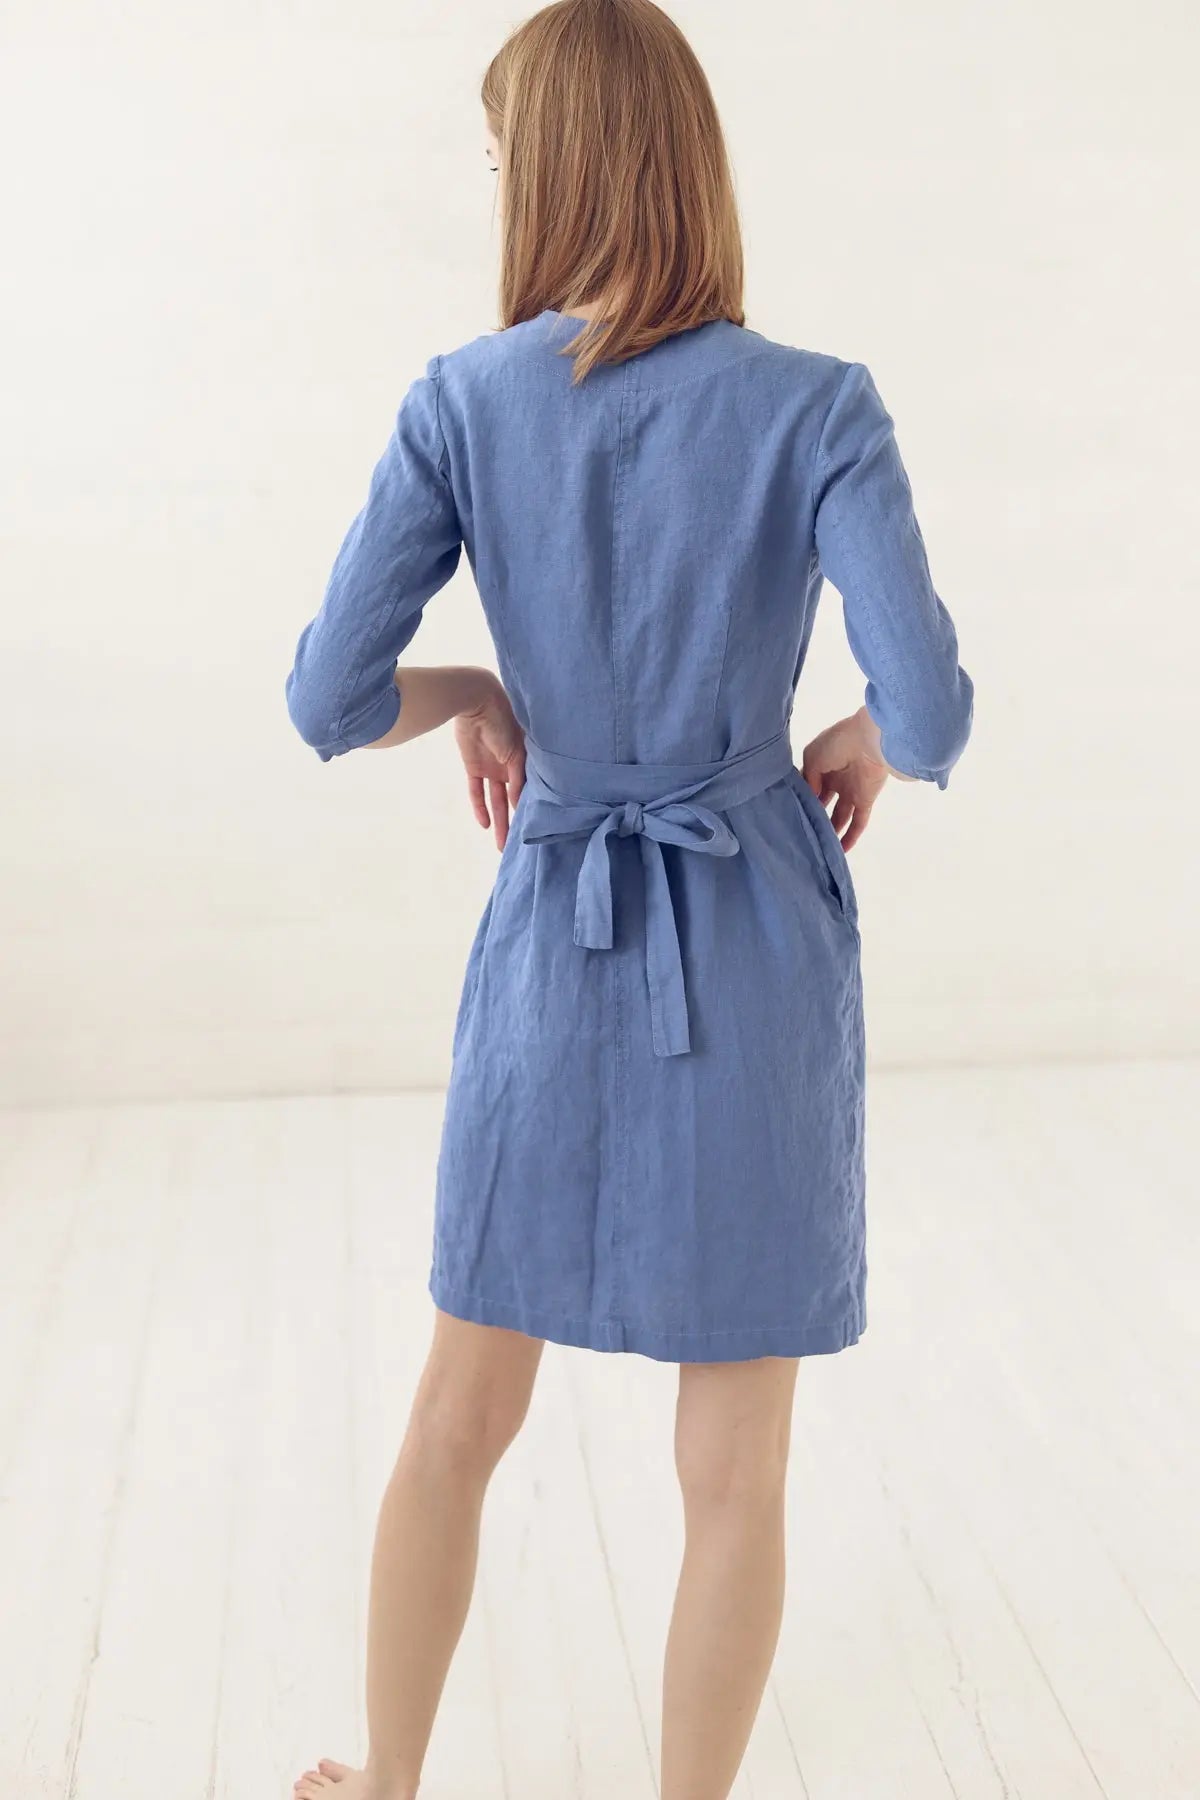 READY TO SHIP Linen Wrap Summer Dress with Belt - Epic Linen luxury linen